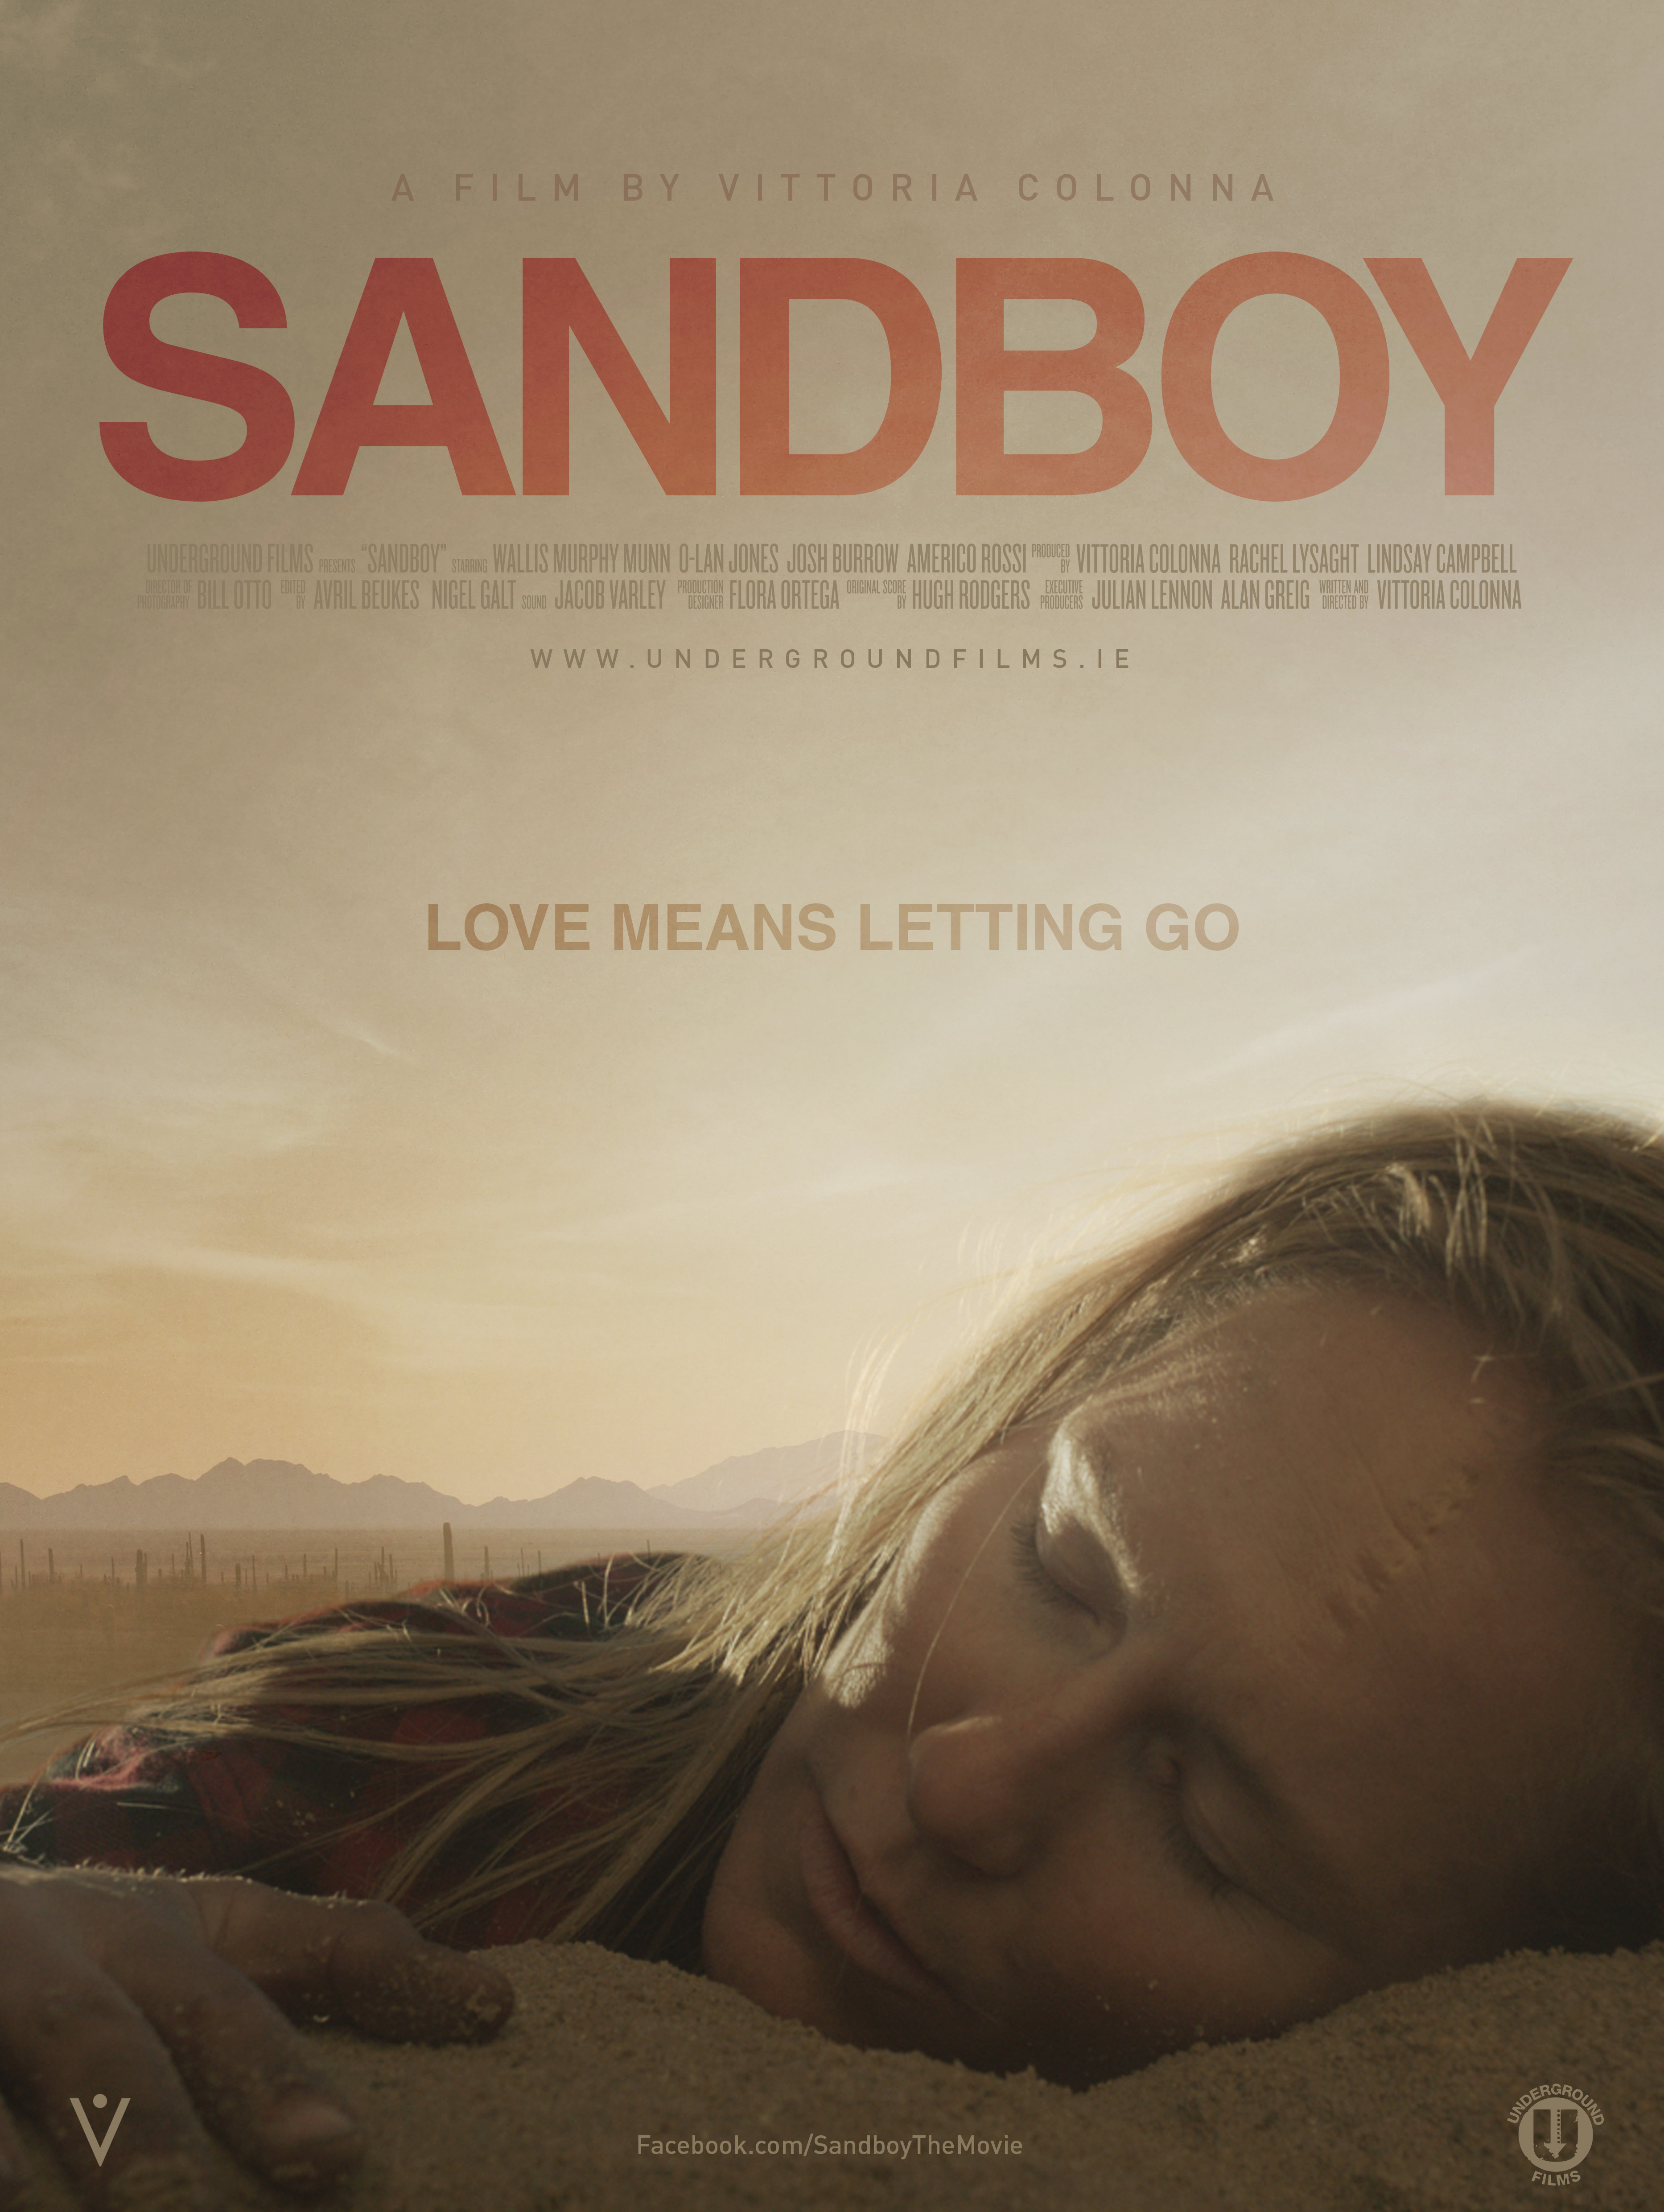 SANDBOY a film by Vittoria Colonna 2015